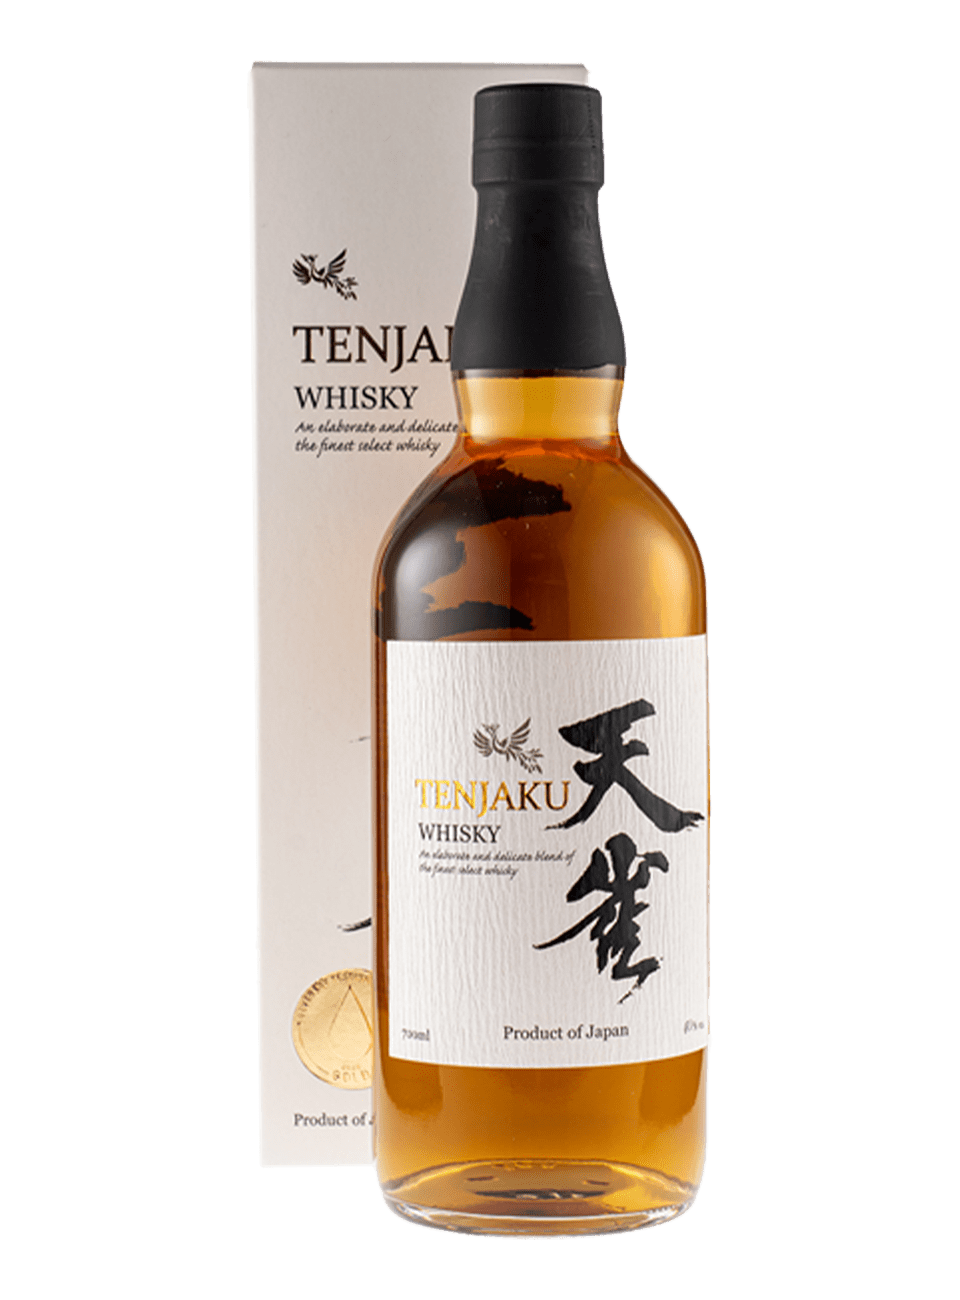 Tenjaku 0.7. Виски японский Tenjaku. Японский виски Tenjiku. Виски тенжаку 0.7. Виски японский купажированный тенжаку.